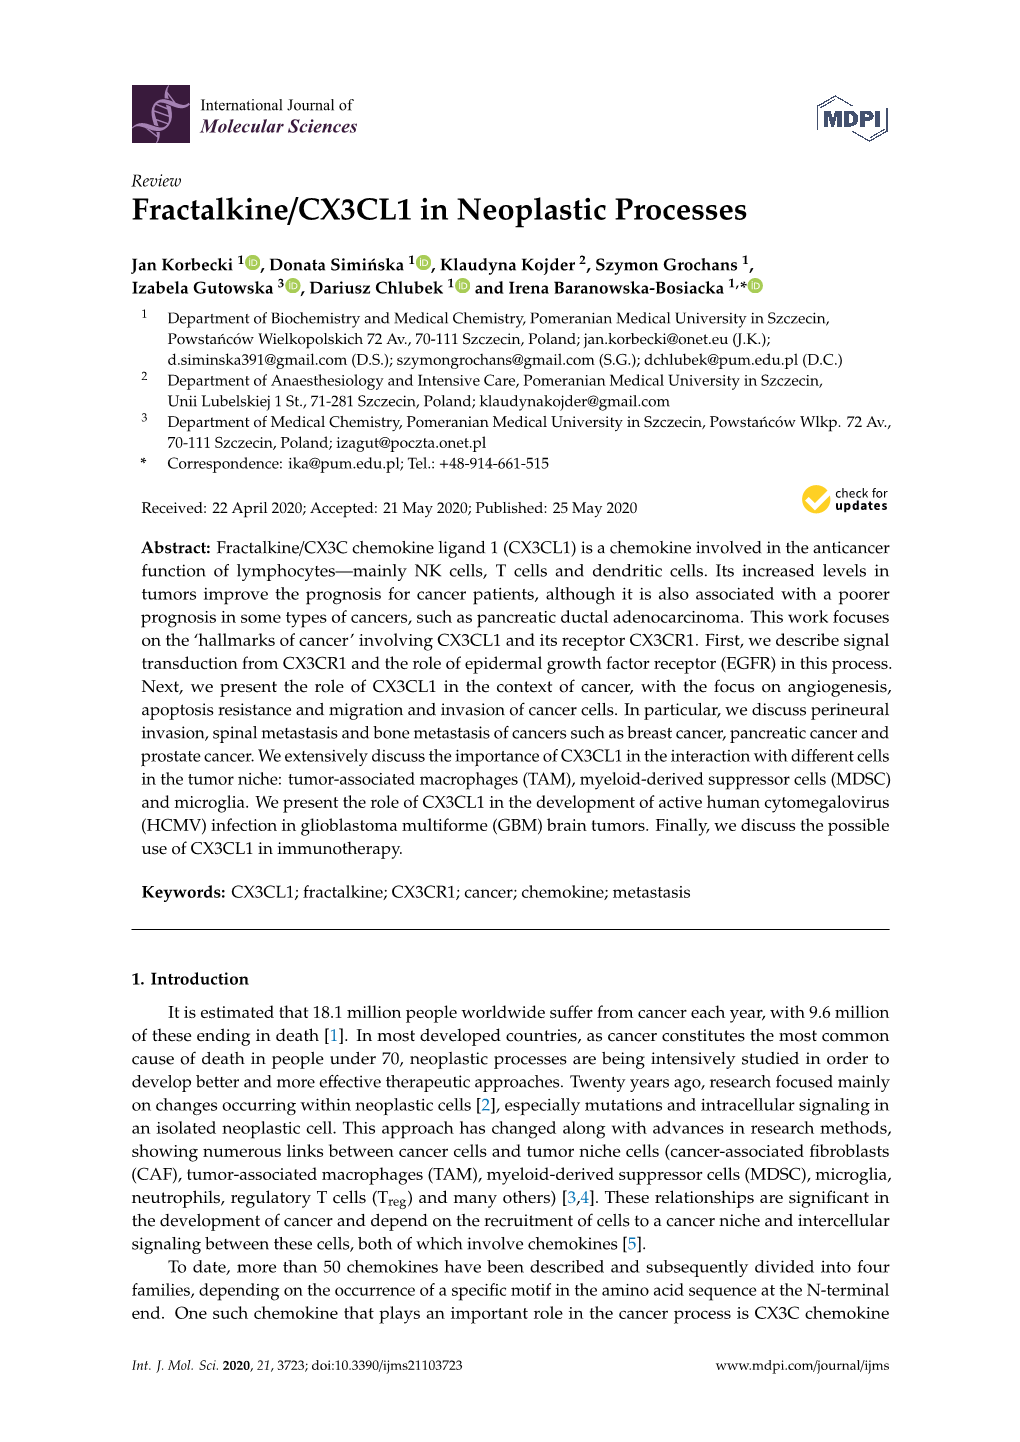 Fractalkine/CX3CL1 in Neoplastic Processes